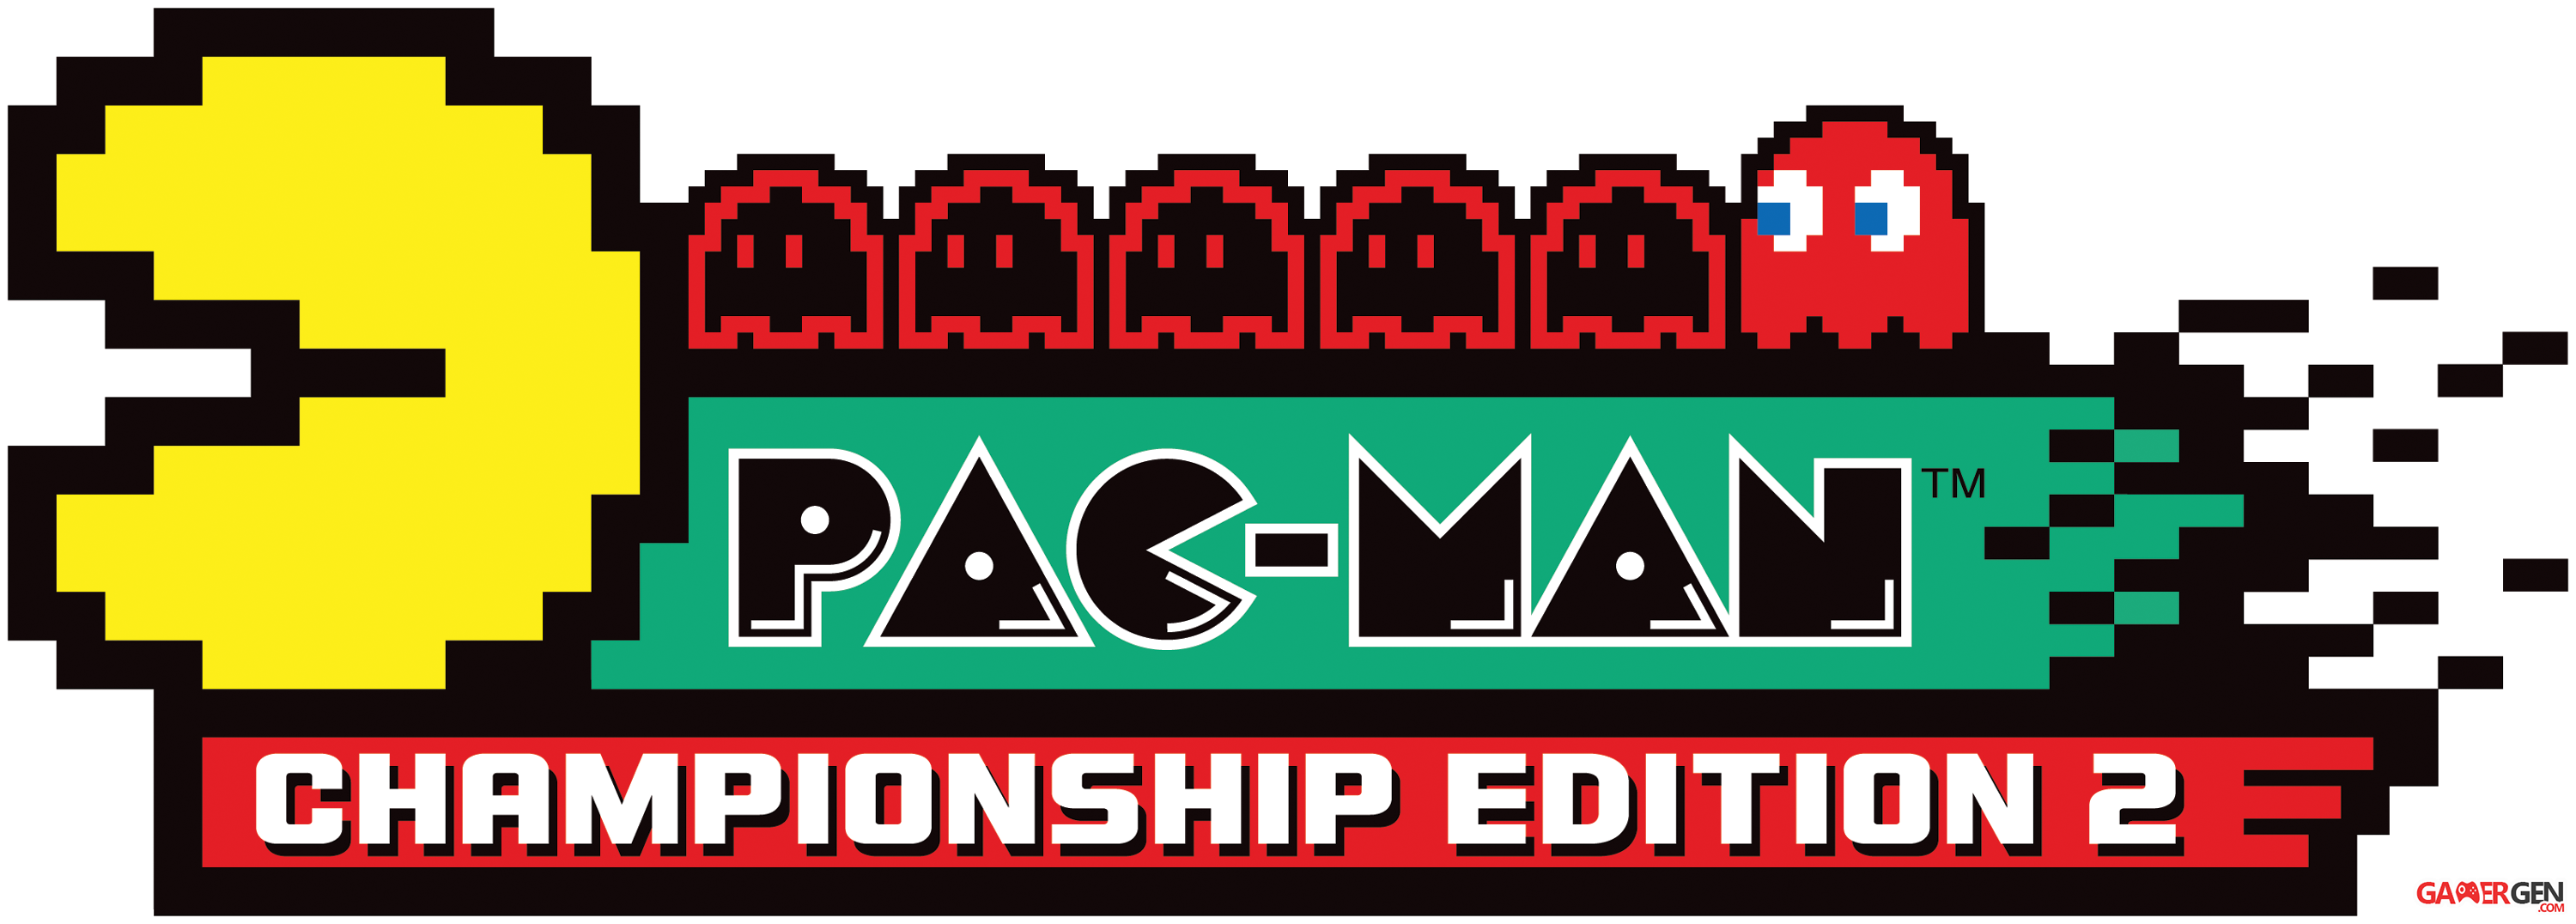 Pac man championship. Pac-man Championship Edition 2. Pac-man Championship Edition. Pac-man Championship Edition DX. Пакман логотип.